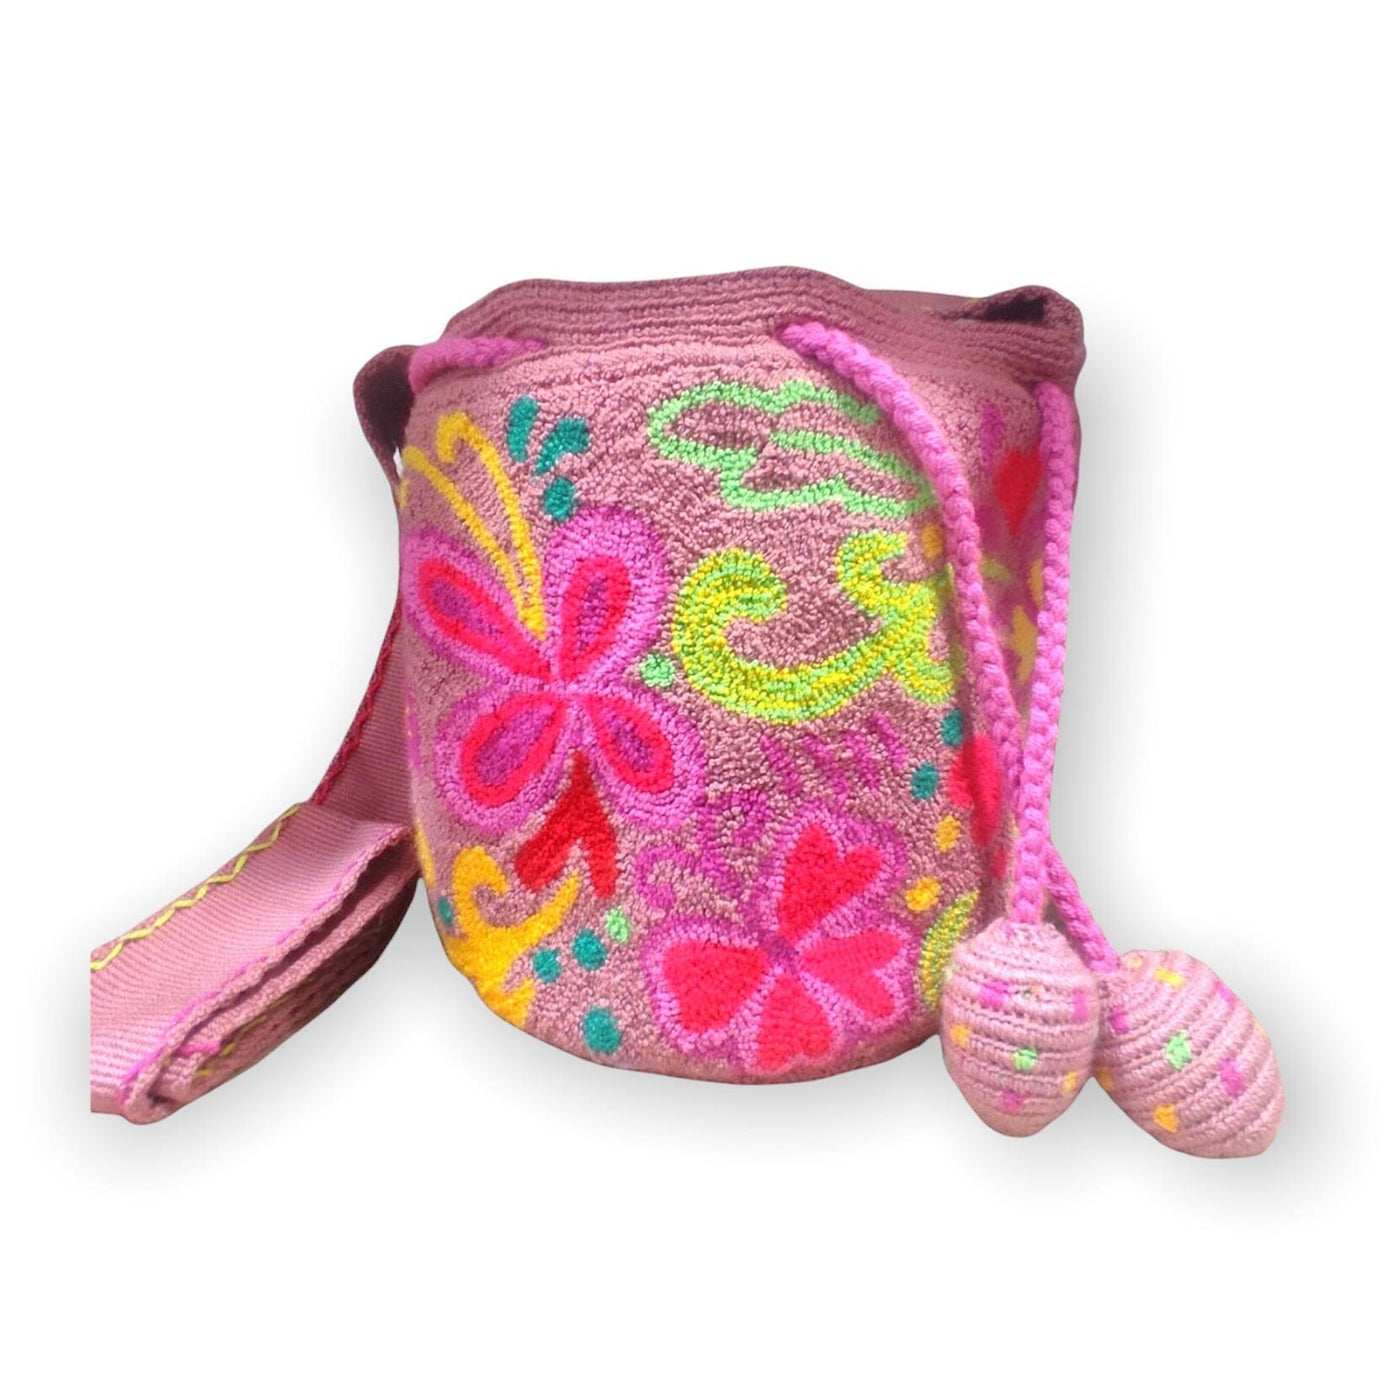 Mirabel Encanto Bag  Authentic Colombian Bag by Colorful 4U